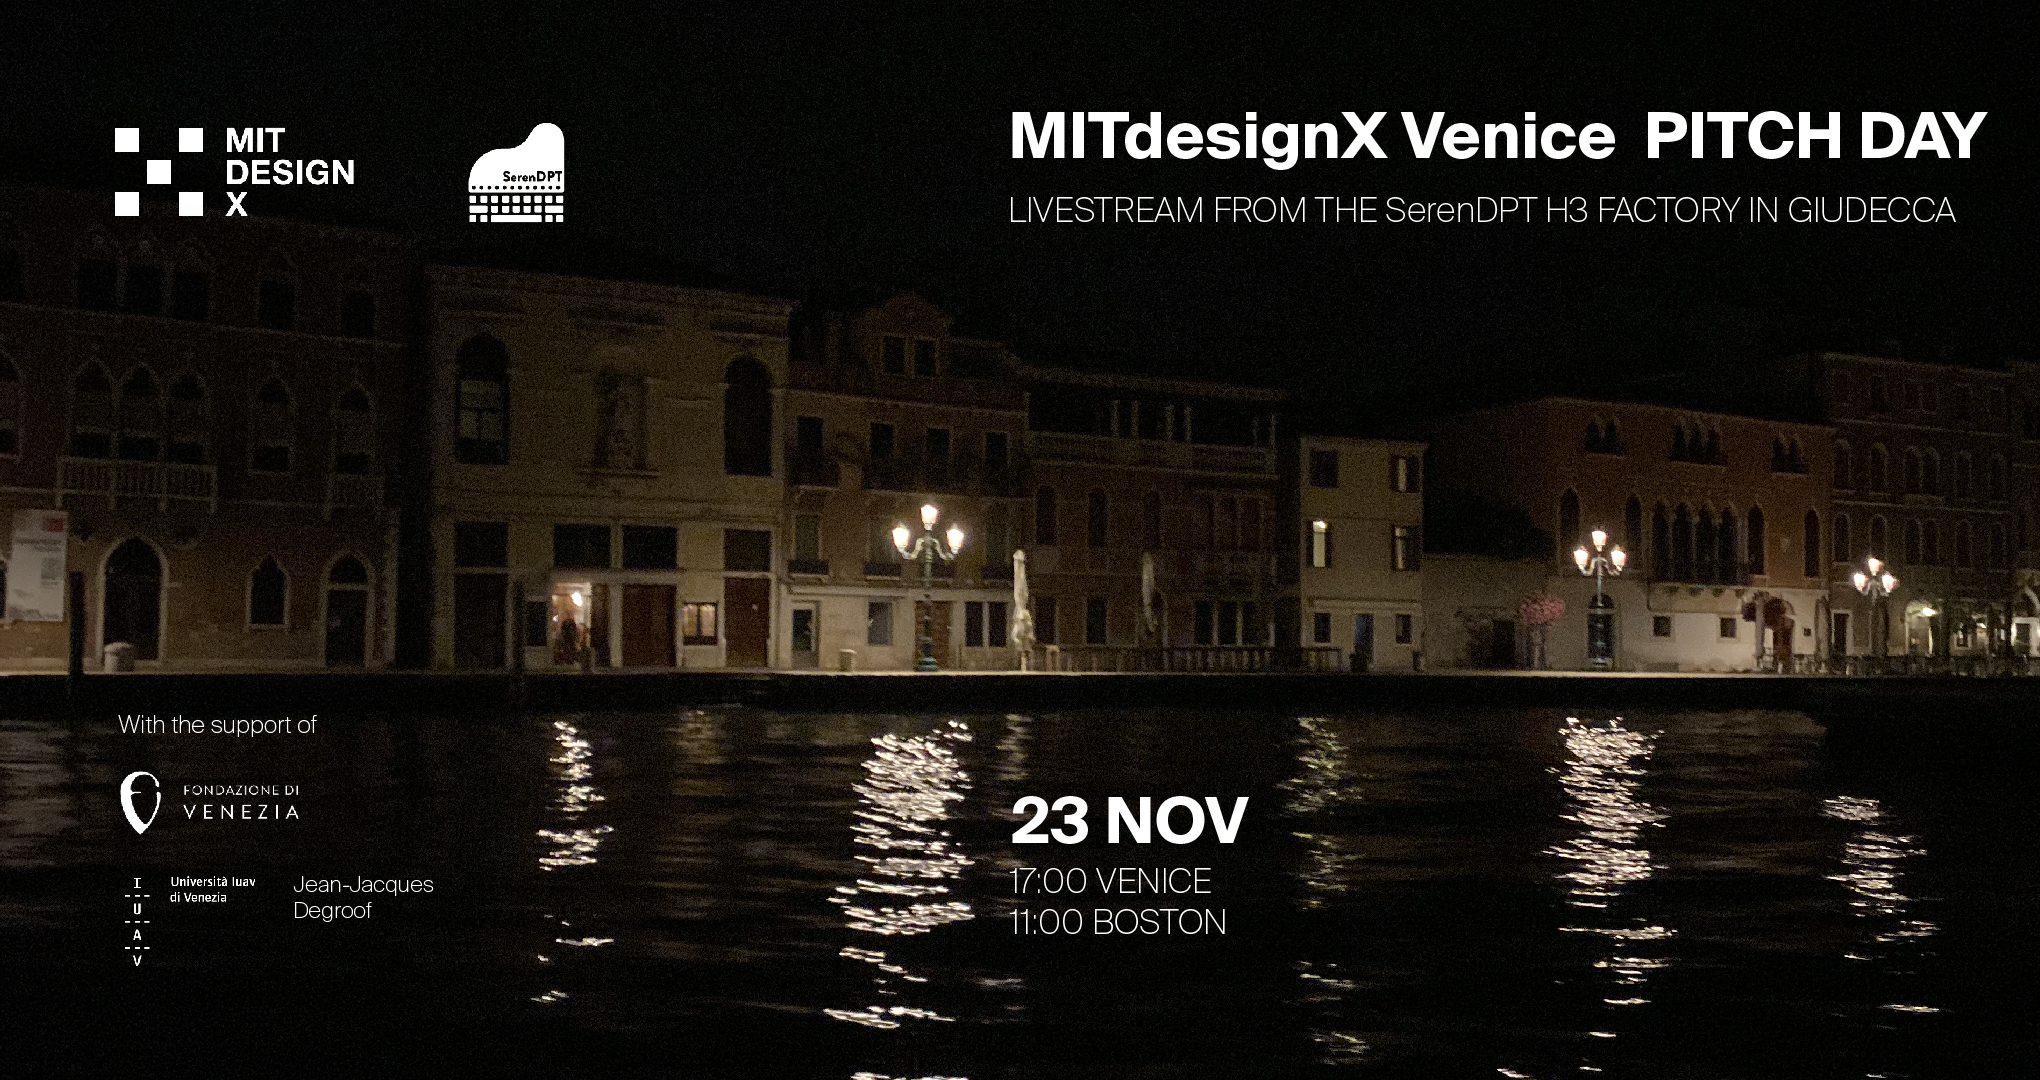 MITdesignX Venice Pitch Day